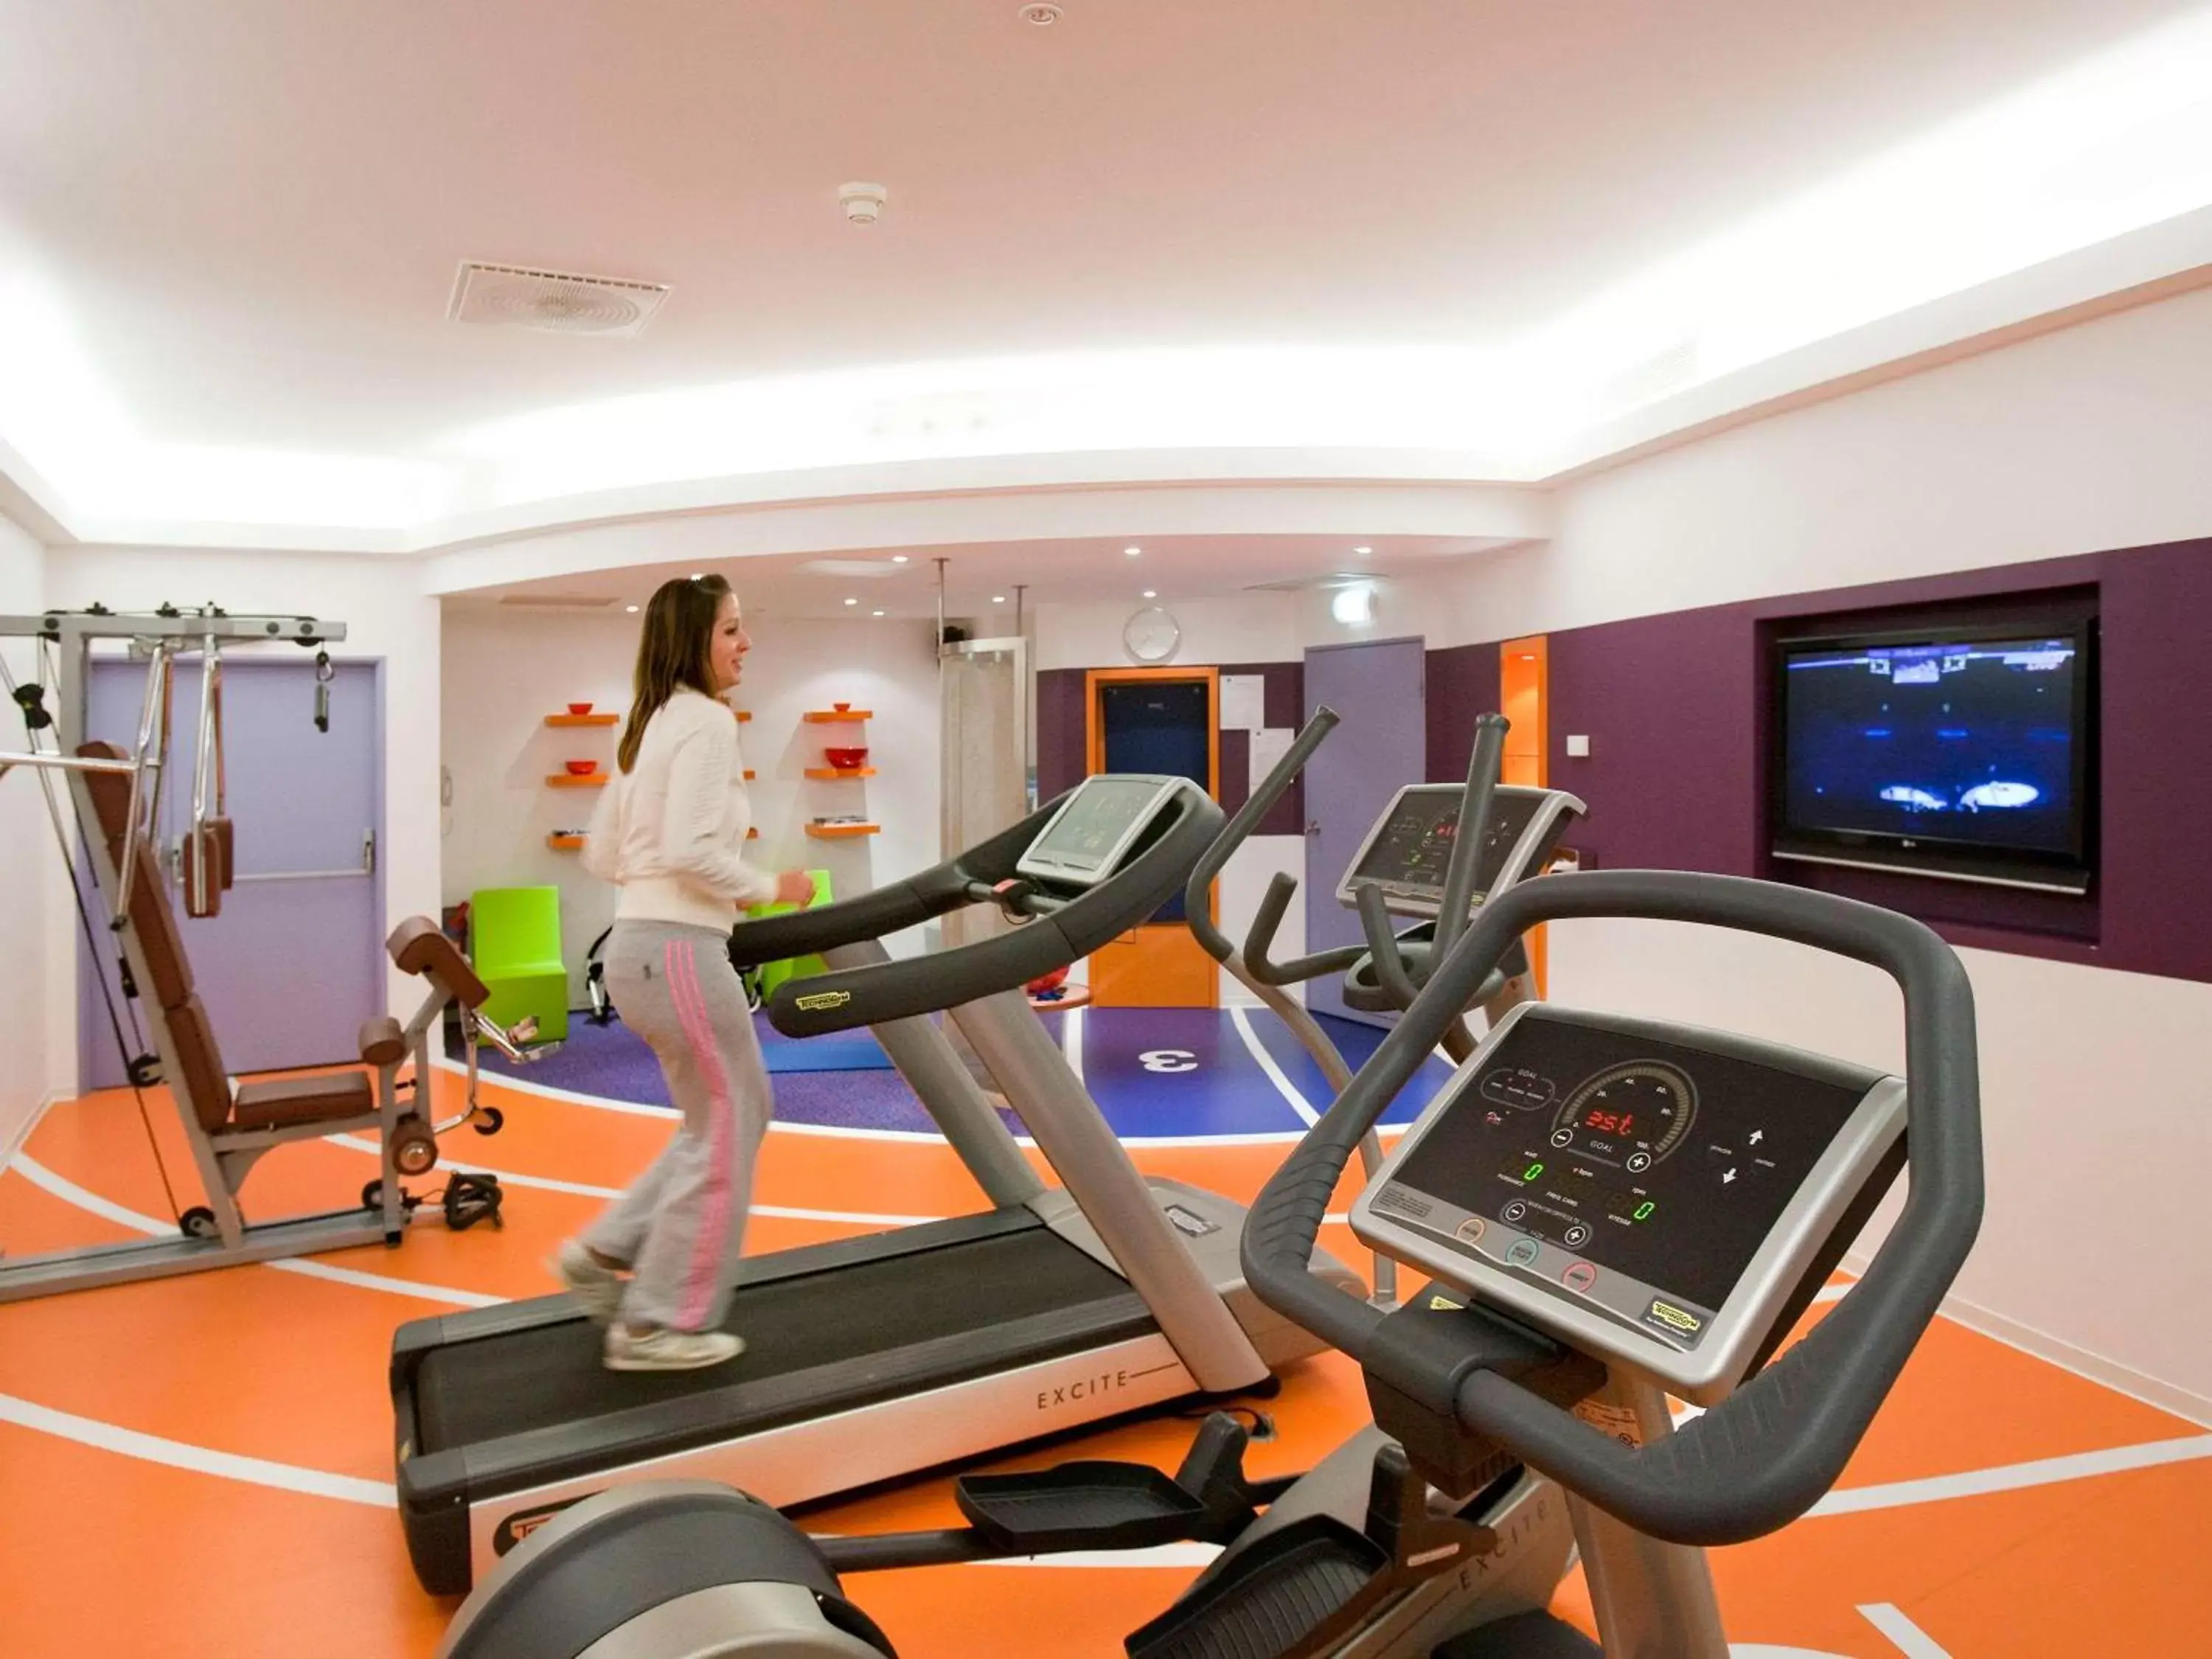 Fitness centre/facilities, Fitness Center/Facilities in Novotel Belfort Centre Atria